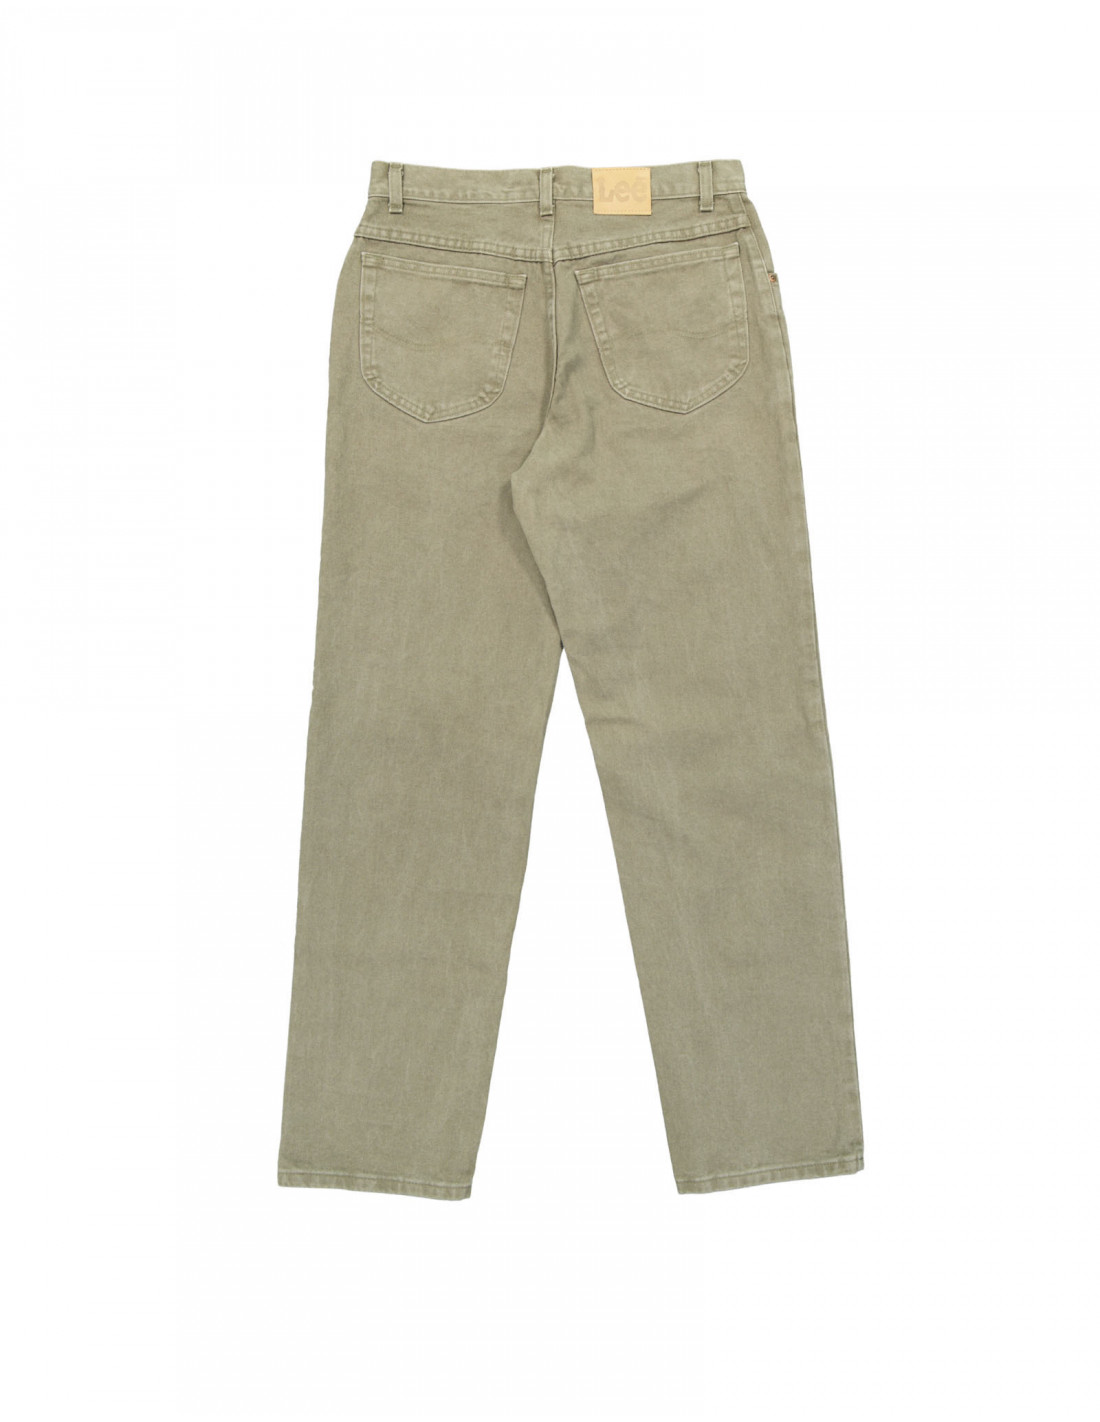 Lee Brooklyn Jeans Black Denim High Waist Vintage Pants Men Women Size W36  L29 36 X 29 - Etsy Israel